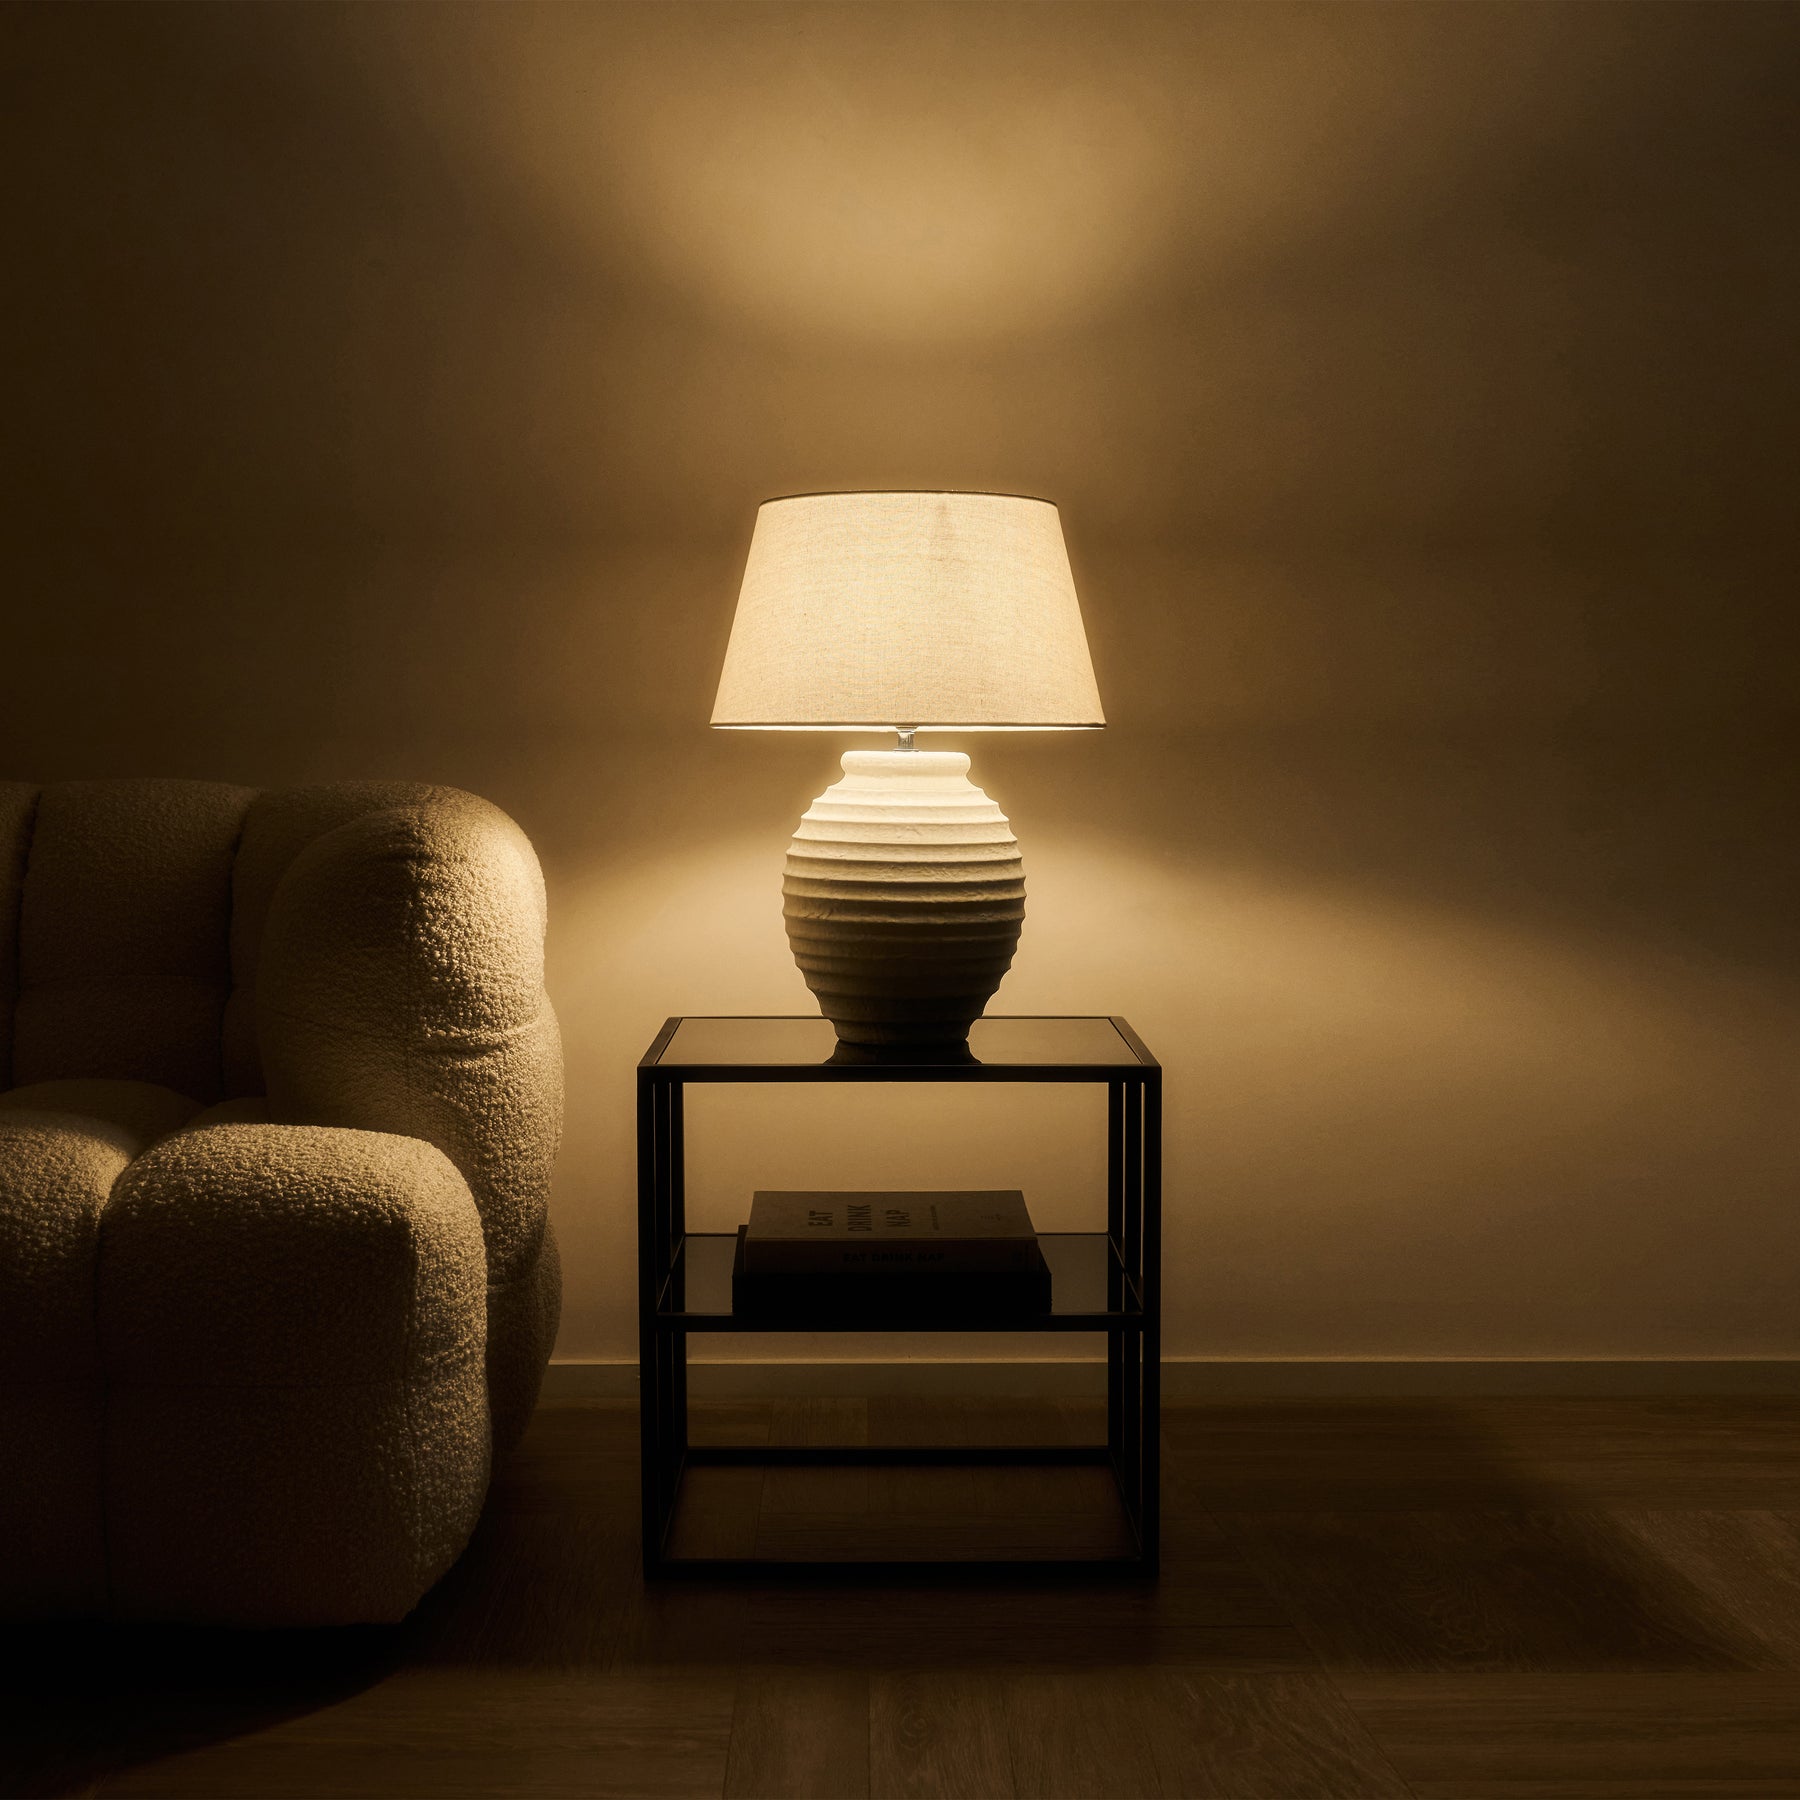 Textured Ceramic Based Table Lamp Natural Shade emitting warm light